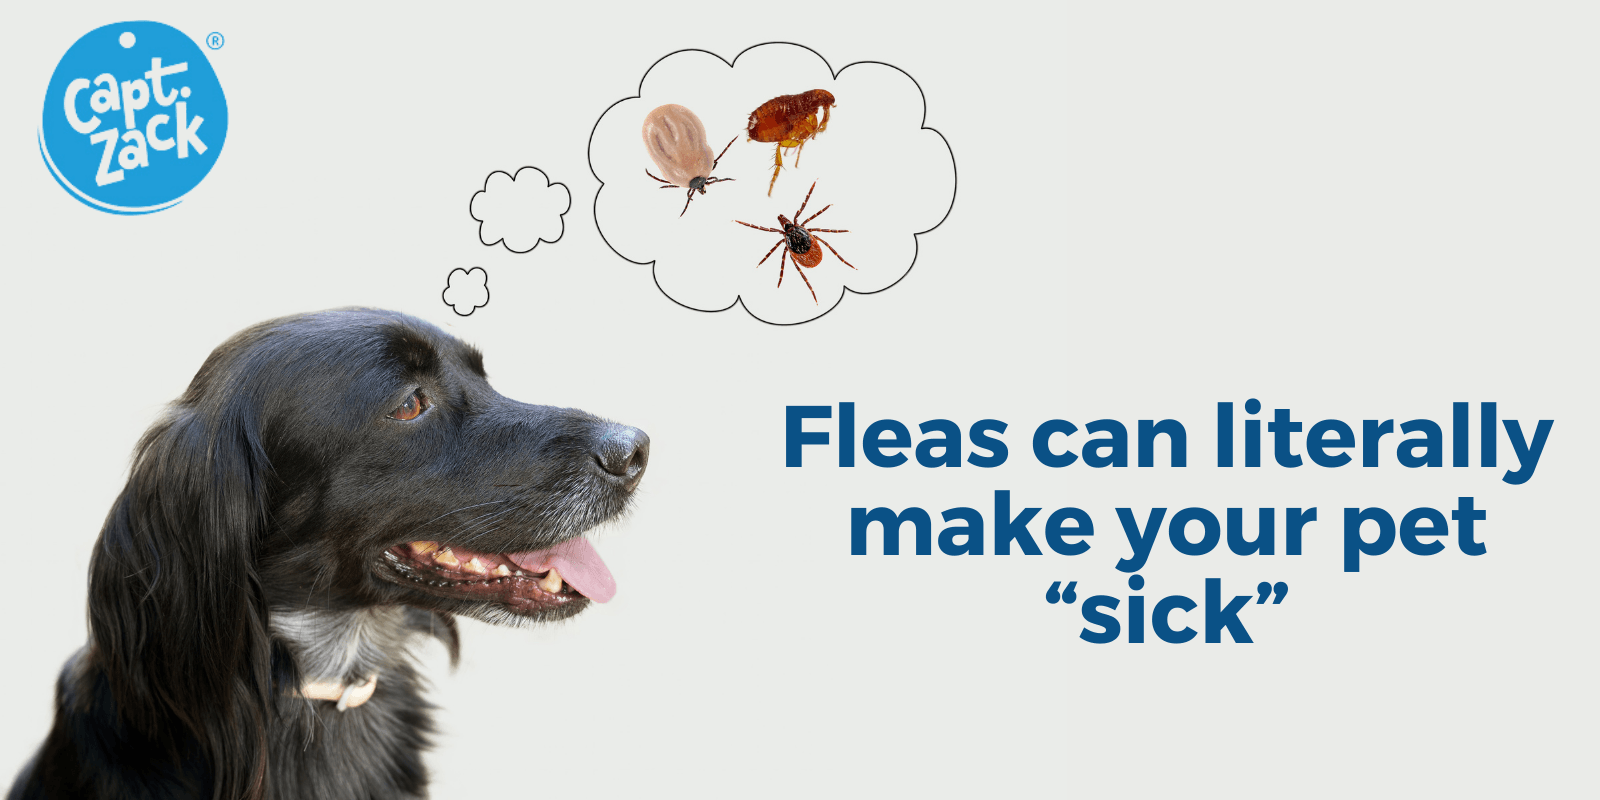 Fleas can literally make your pet “sick” - Captain Zack